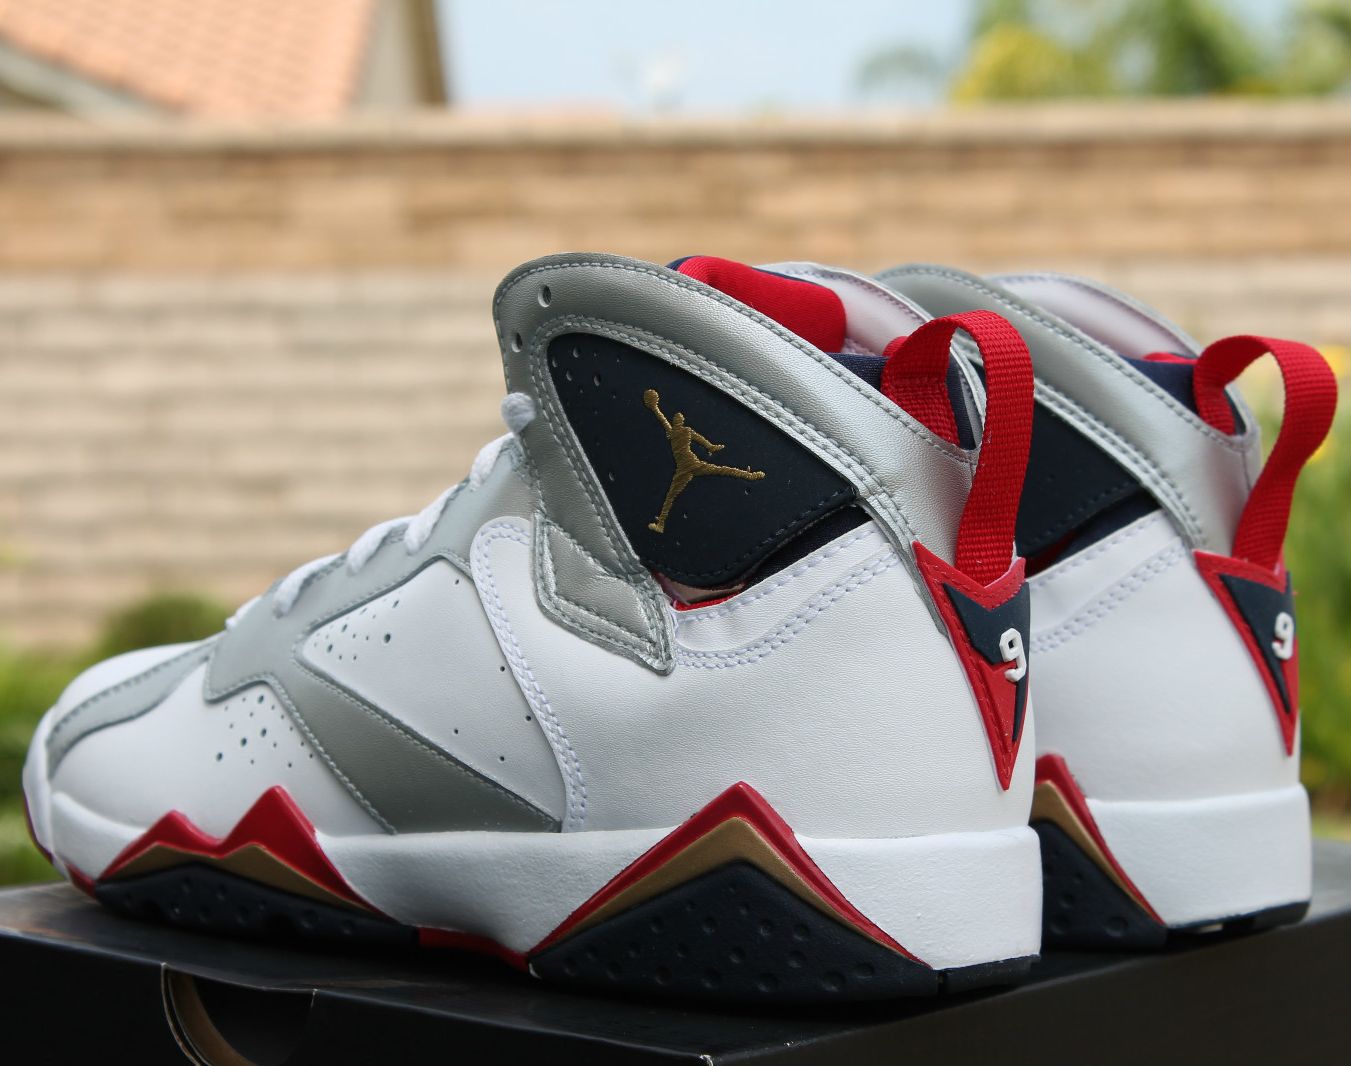 Air Jordan VII "Olympic" Release Reminder Air Jordans, Release